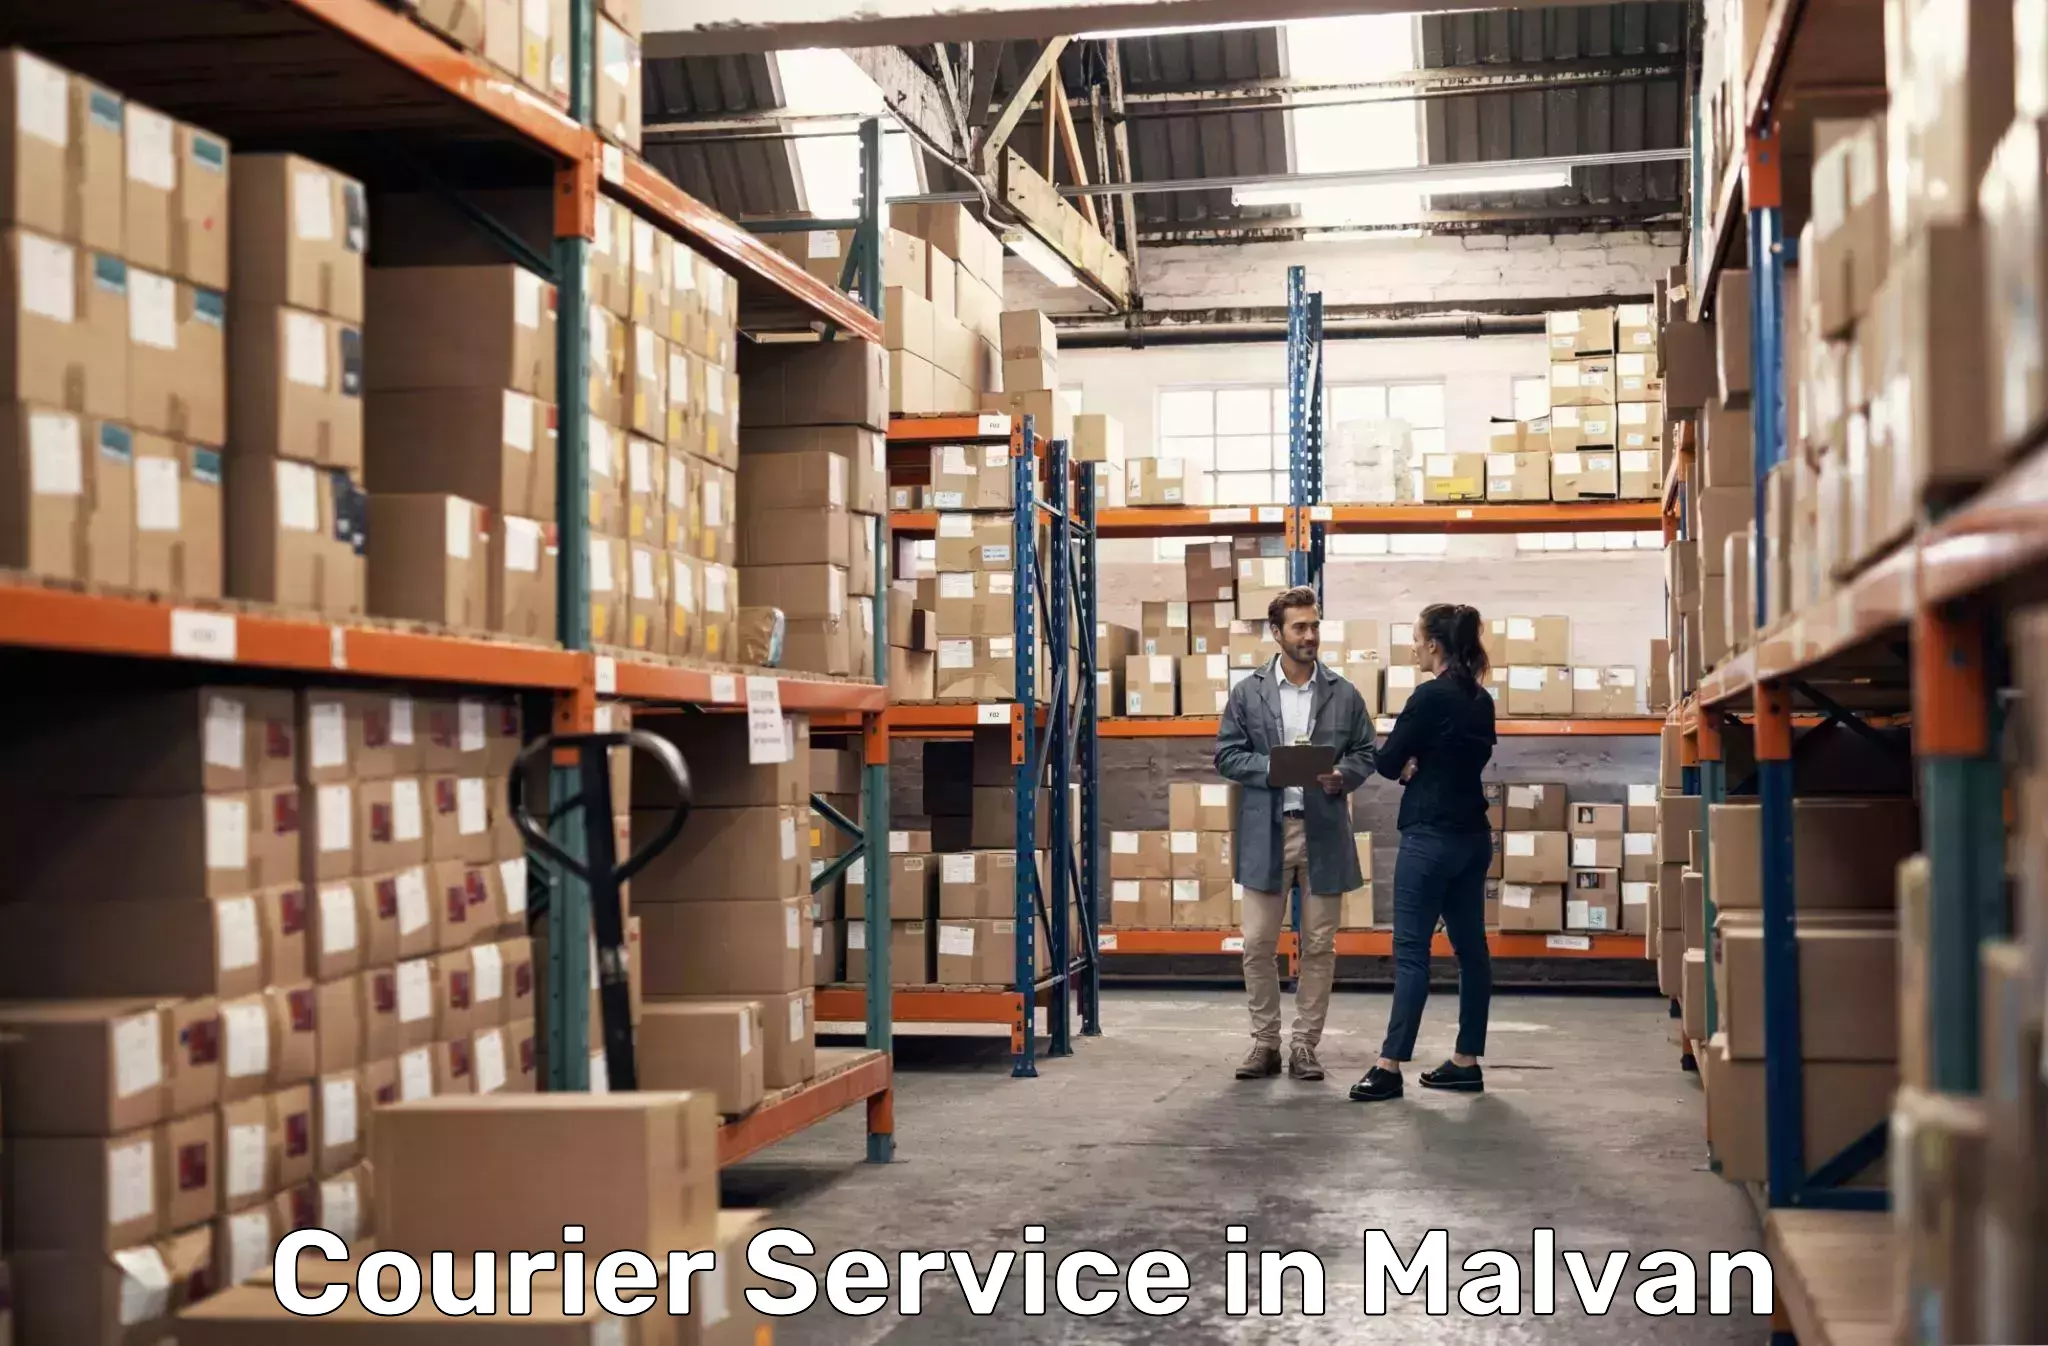 Speedy delivery service in Malvan